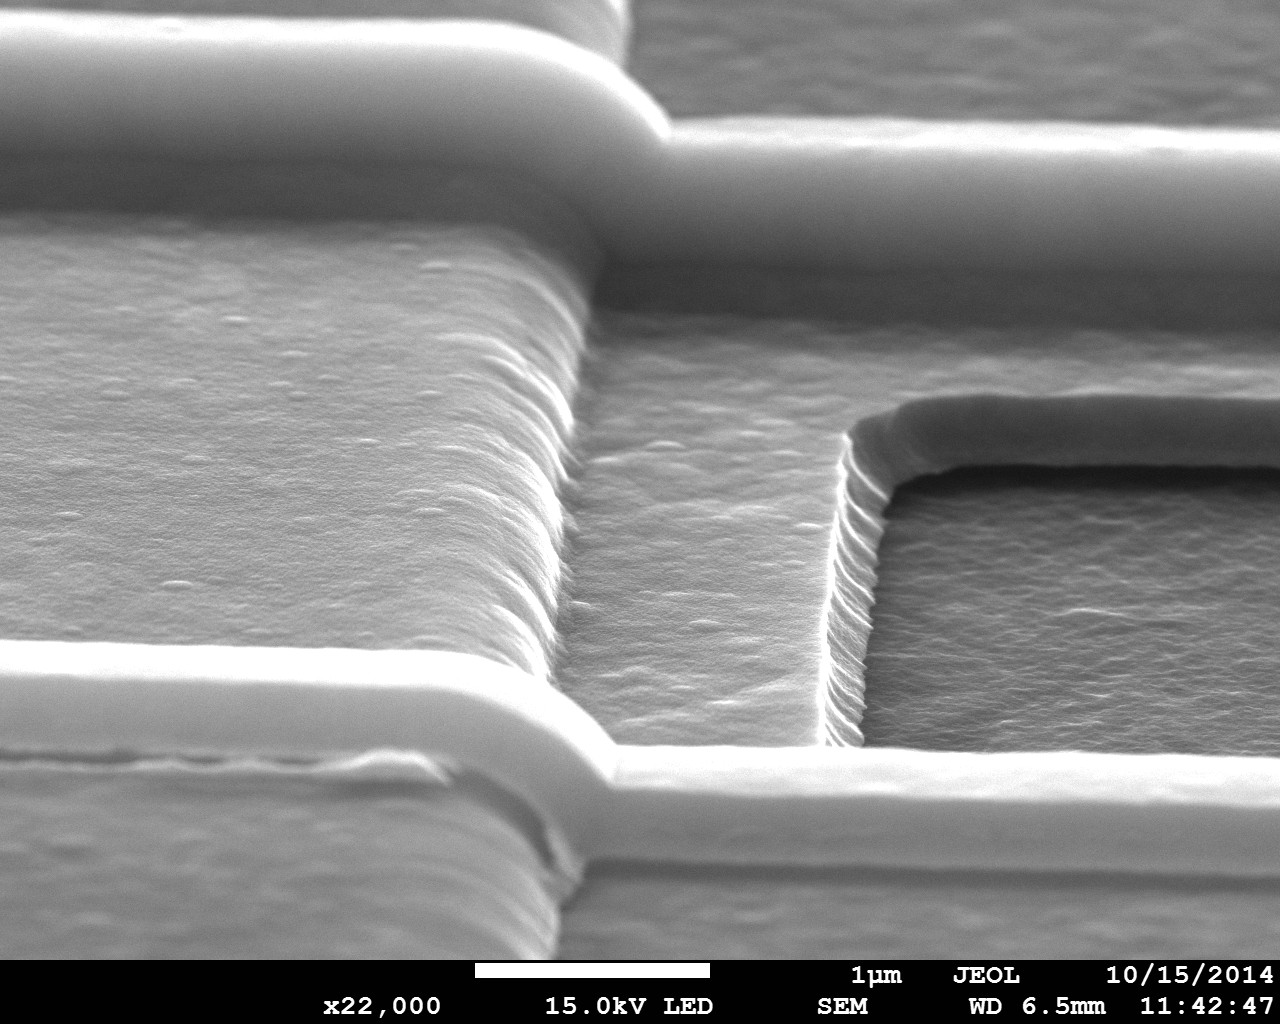 TFT (Thin-Film Transistor) seen at the microscopique level